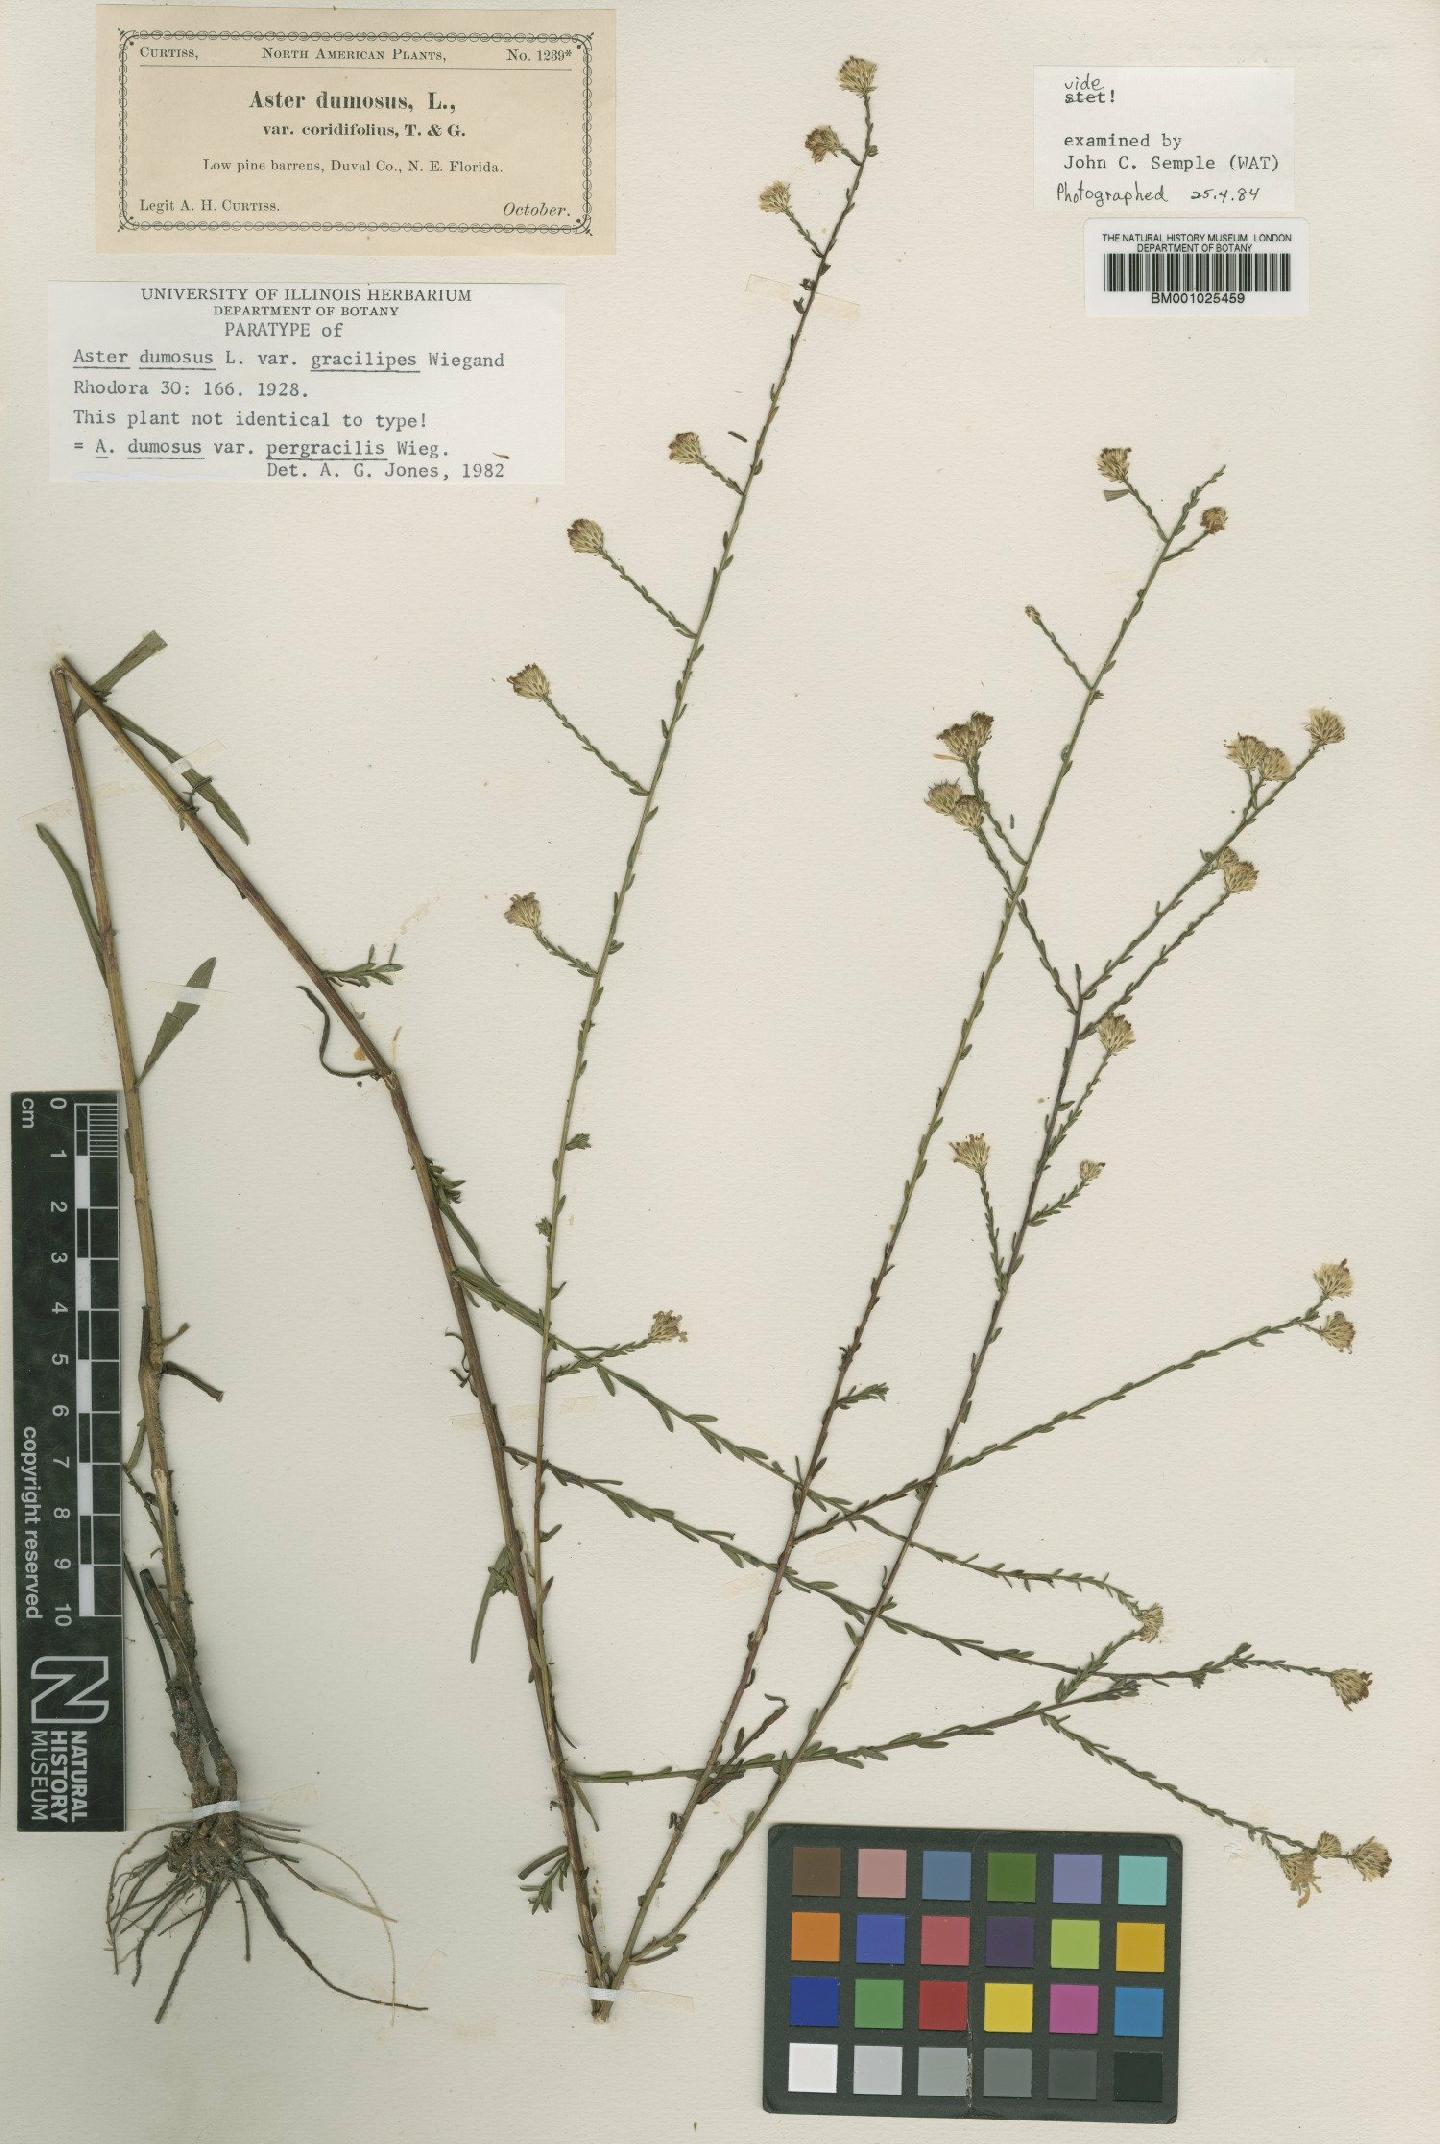 To NHMUK collection (Aster dumosus var. pergracilis Wiegand; Type; NHMUK:ecatalogue:1083865)